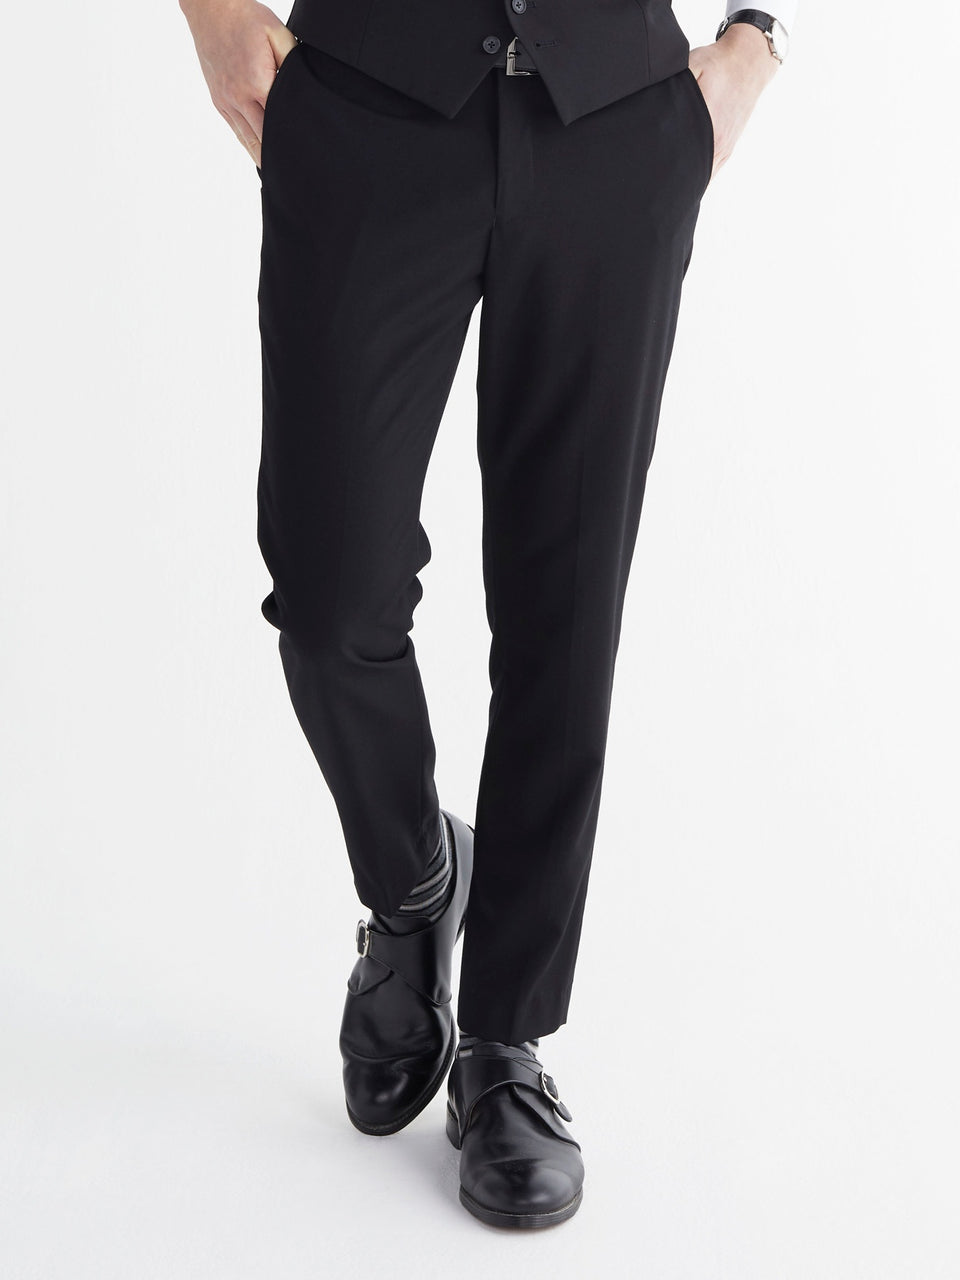 Buy Online| Spykar Men Navy Blue Cotton Slim Fit Ankle Length Trouser